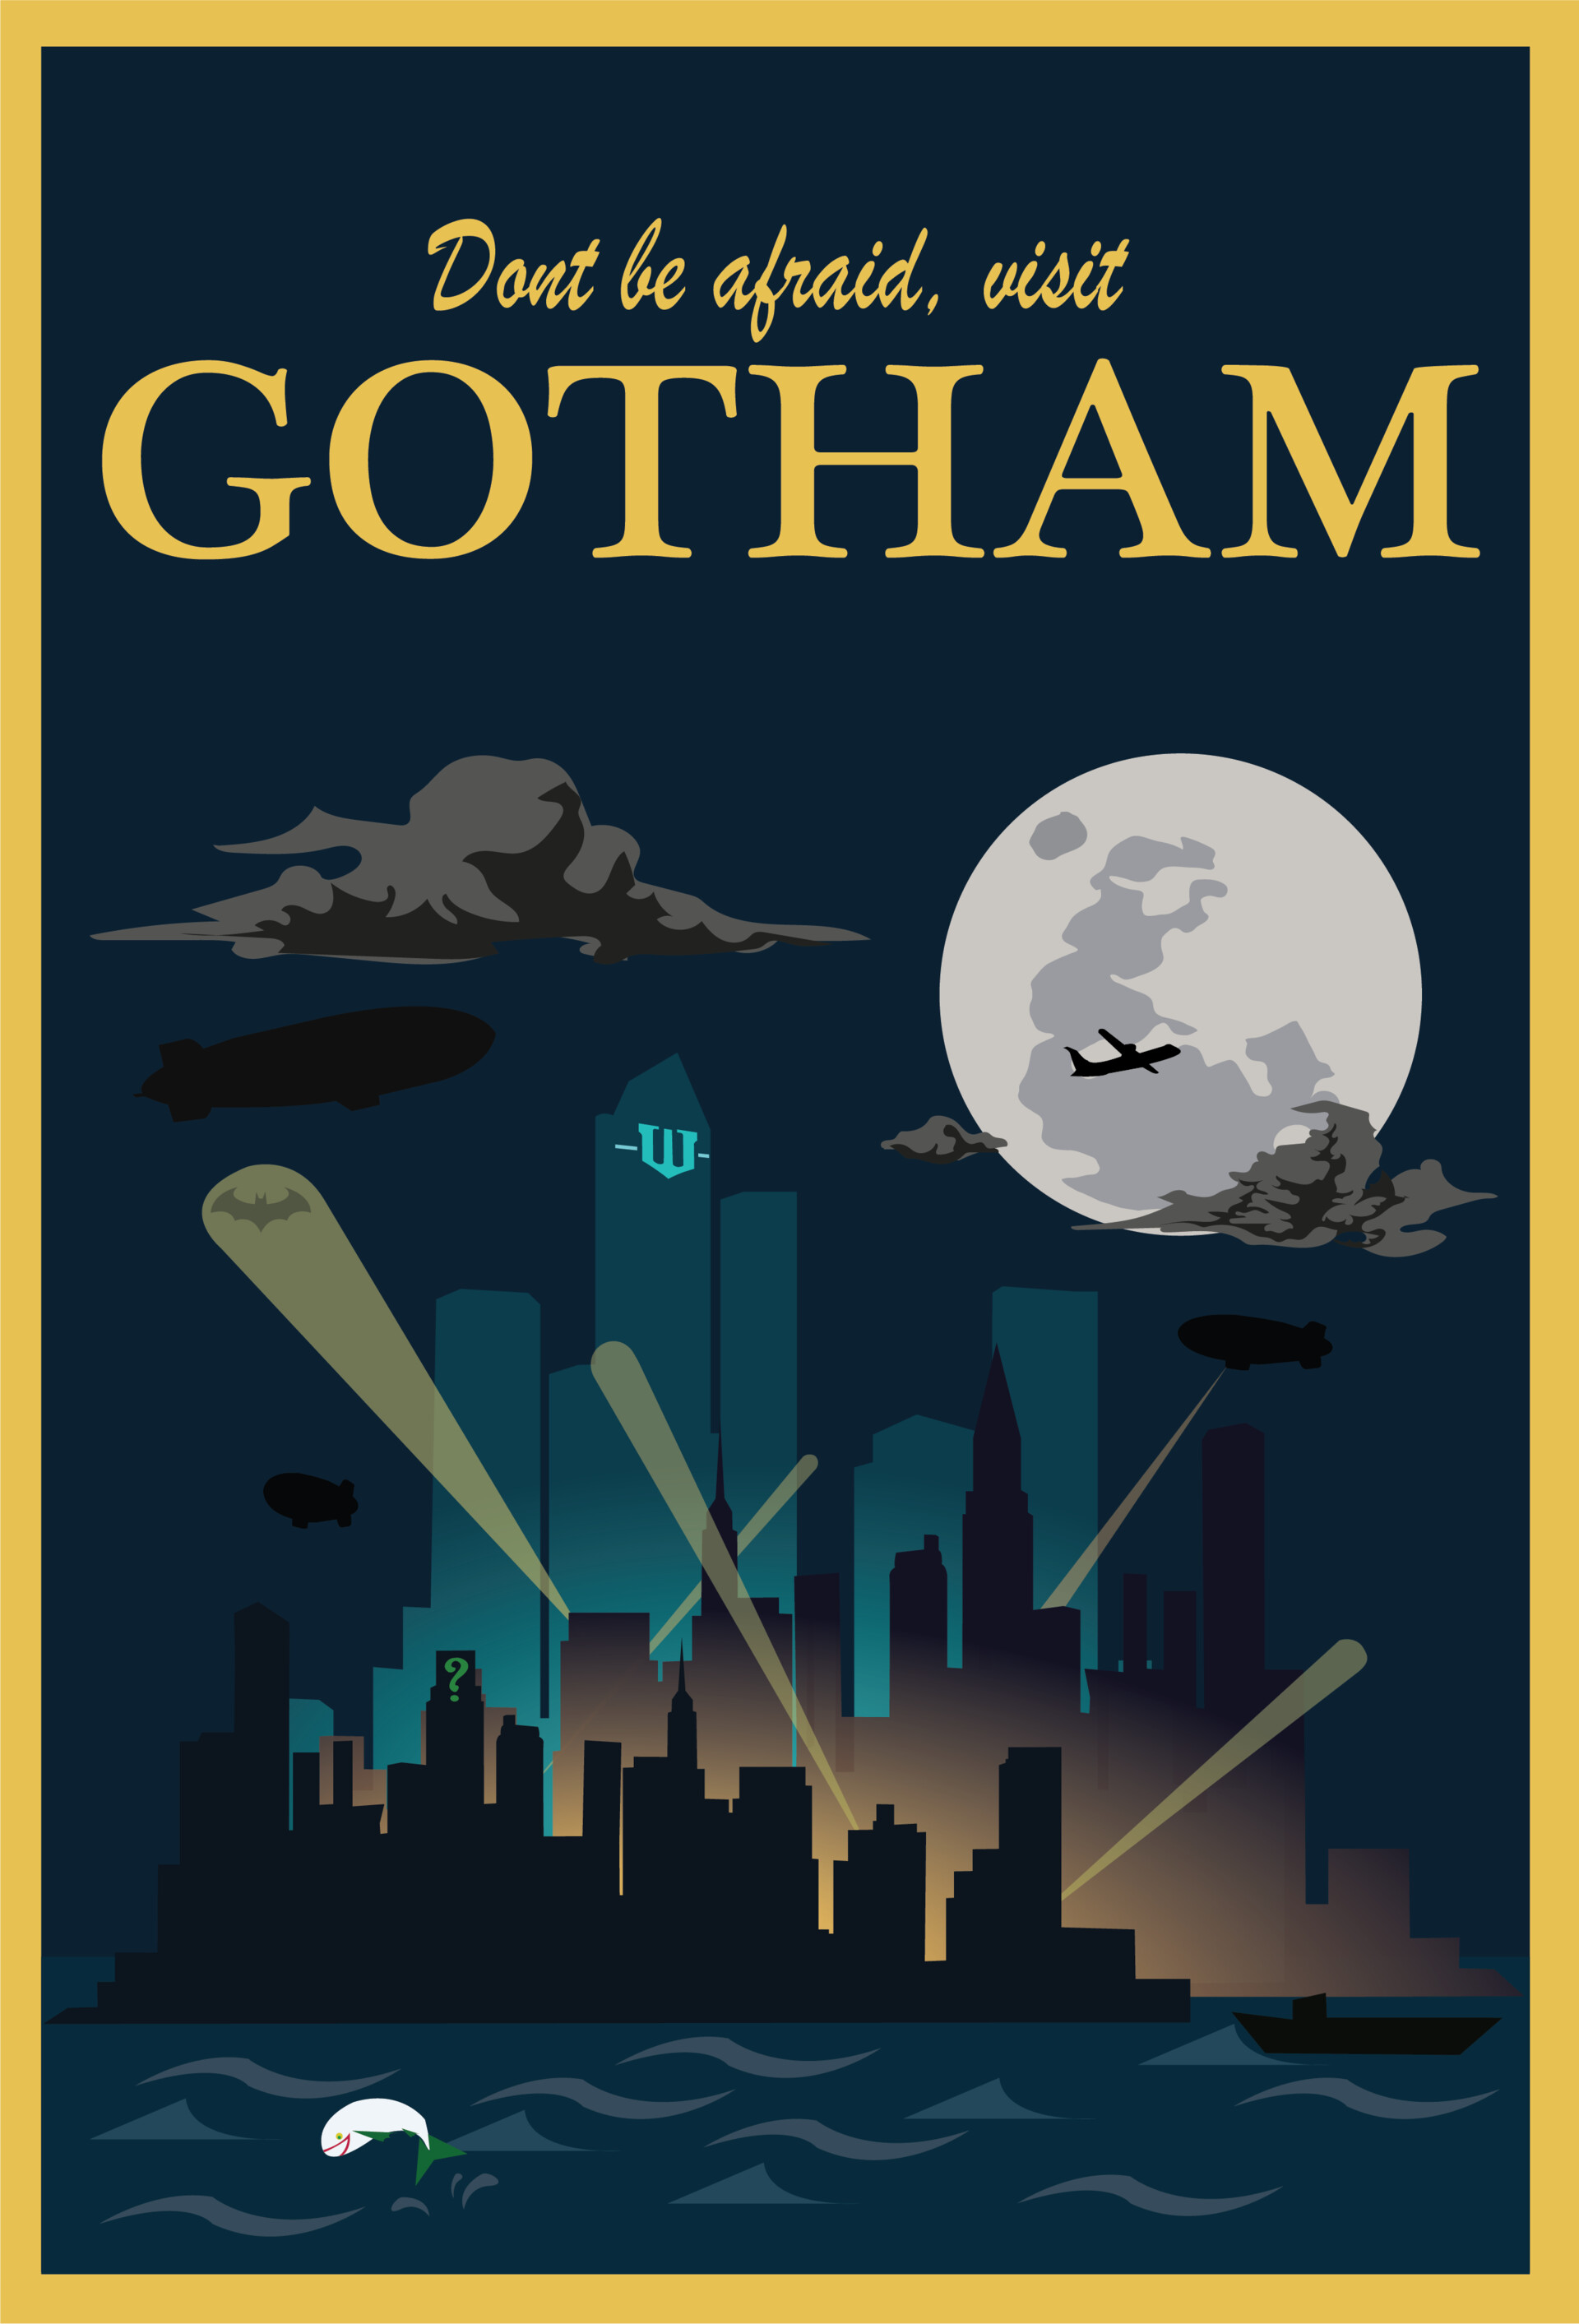 gotham travel poster